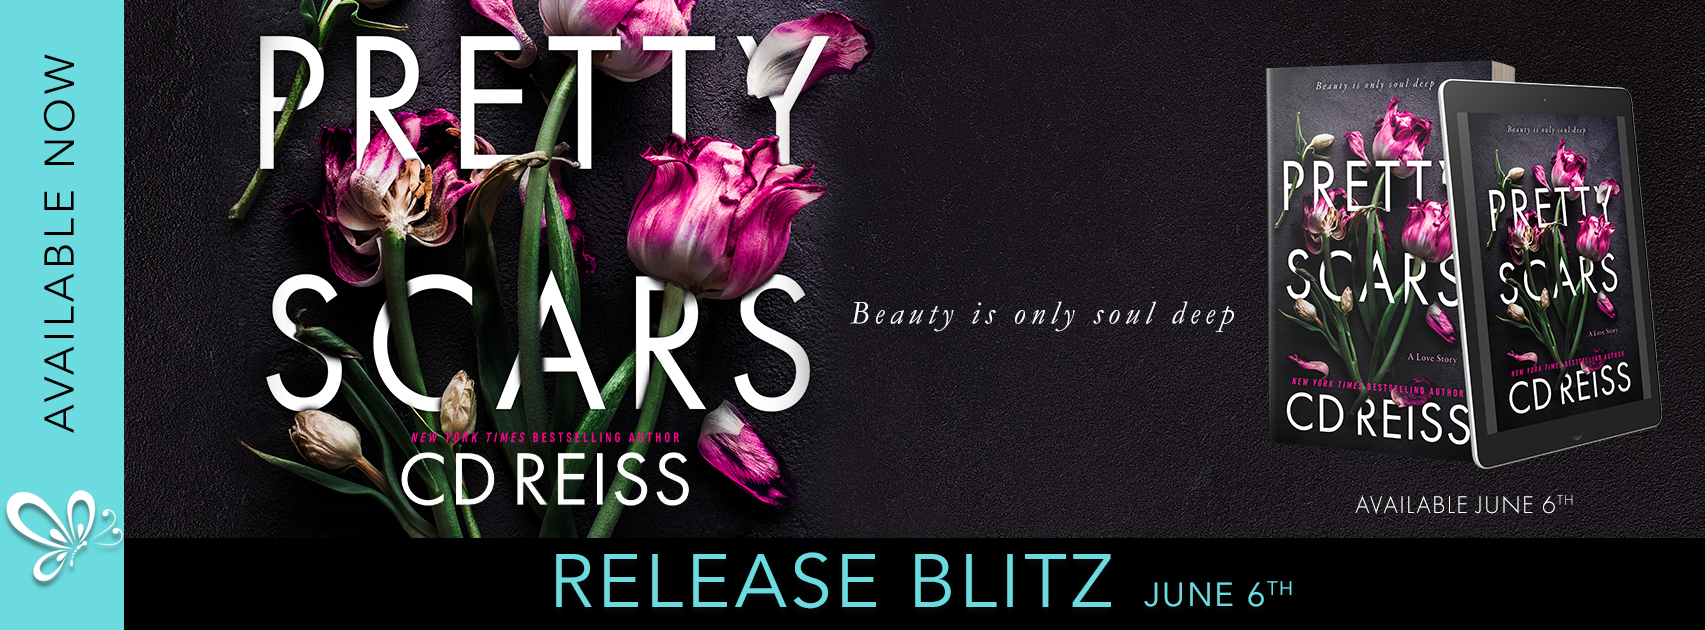 Release Blitz: Pretty Scars by CD Reiss